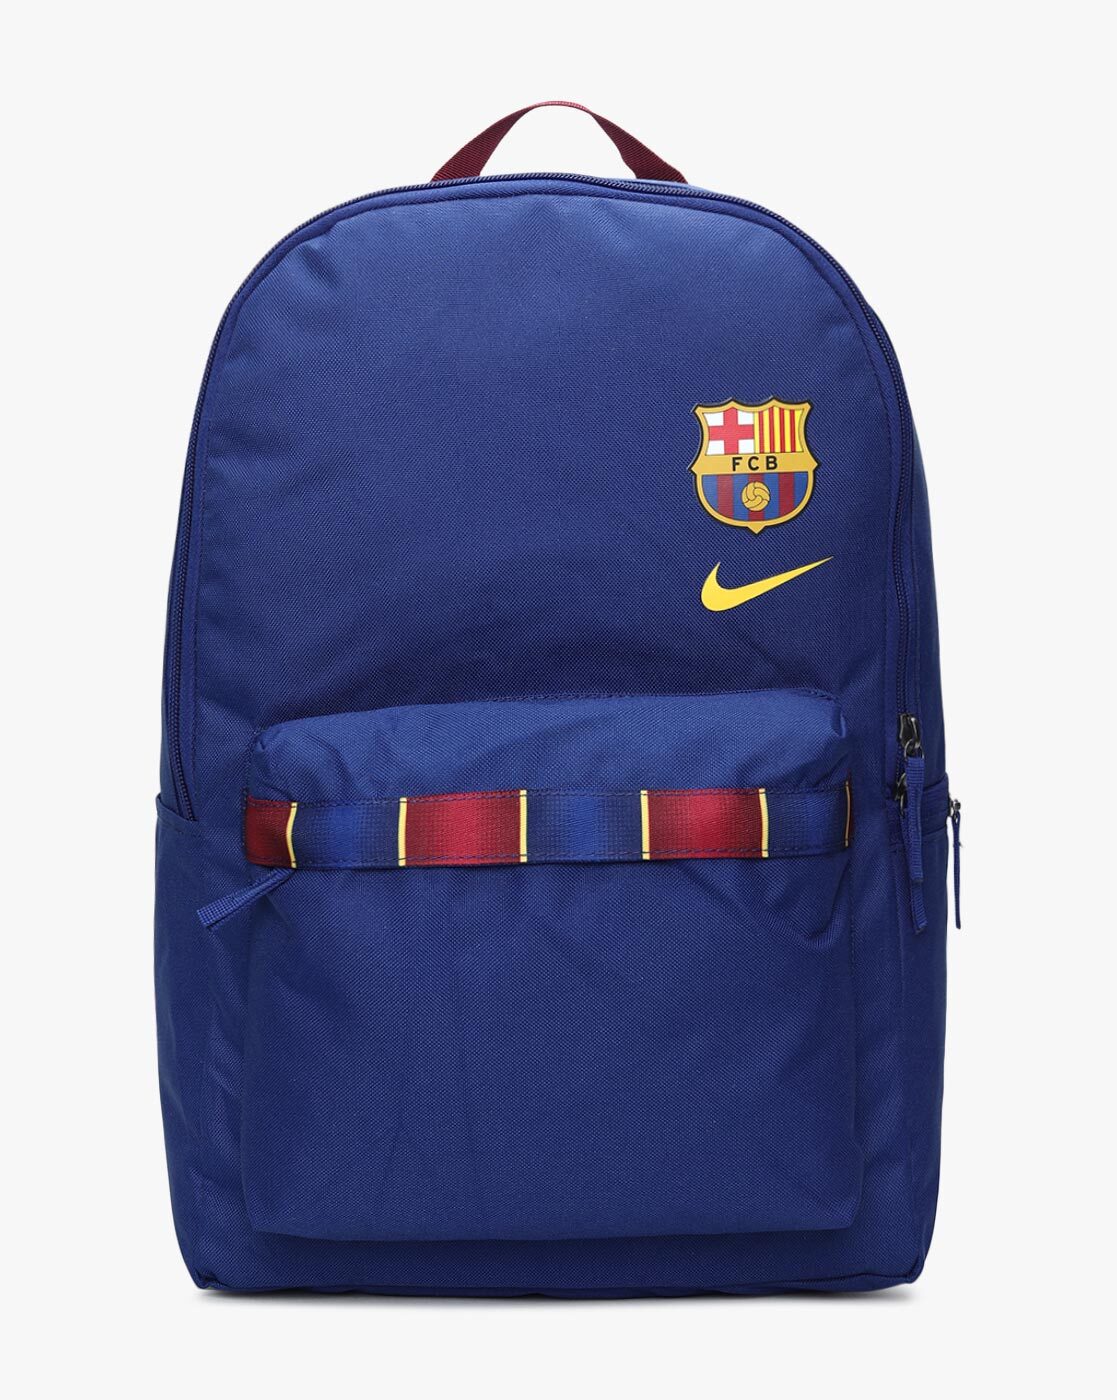 Backpack FC Barcelona Marine 45 CM High-End - 3 cpt - FCB